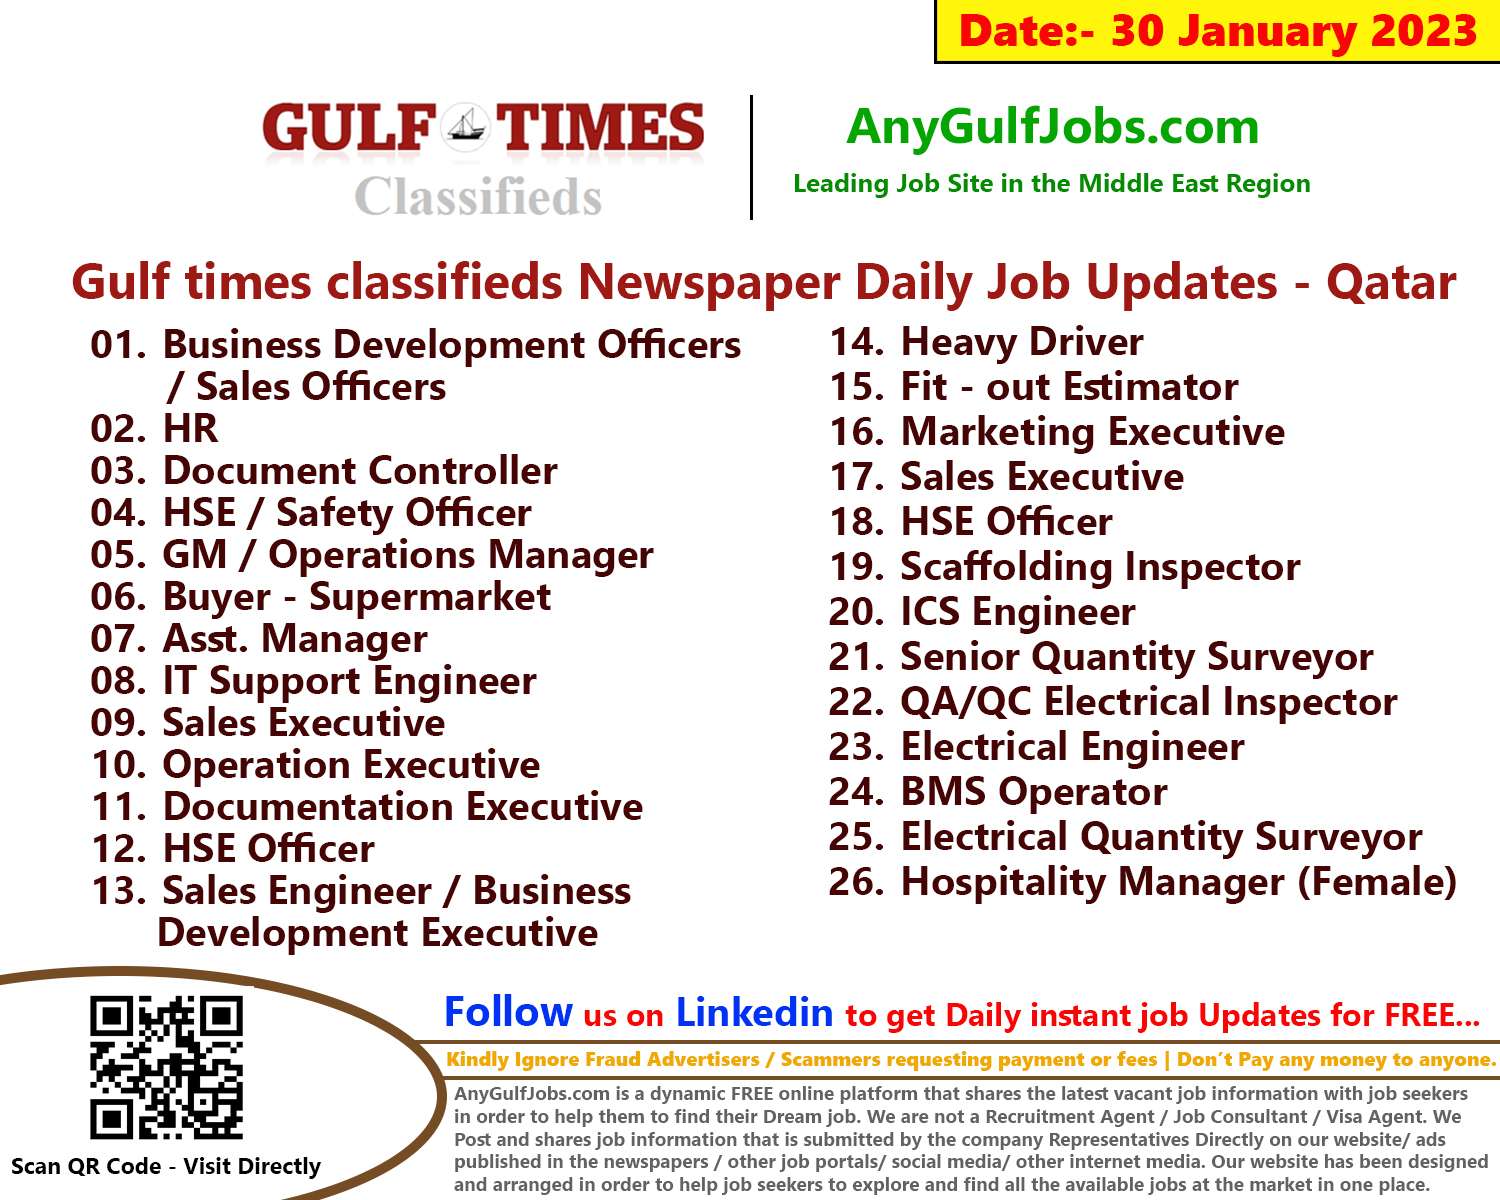 Gulf times classifieds Job Vacancies Qatar - 30 January 2023